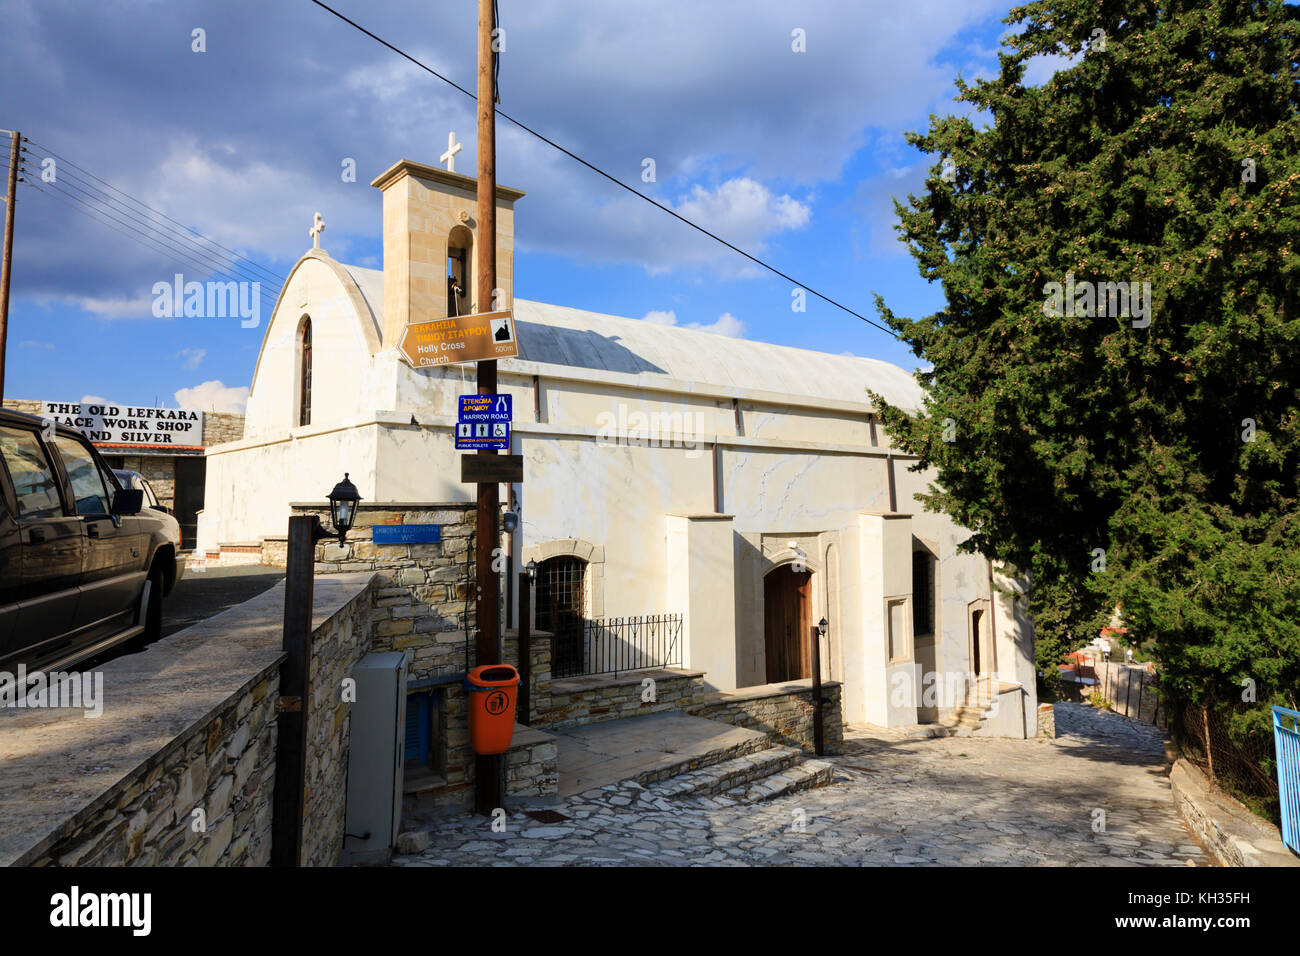 Holly Cross church, Pano Lefkara, Cyprus.Cyprus Stock Photo